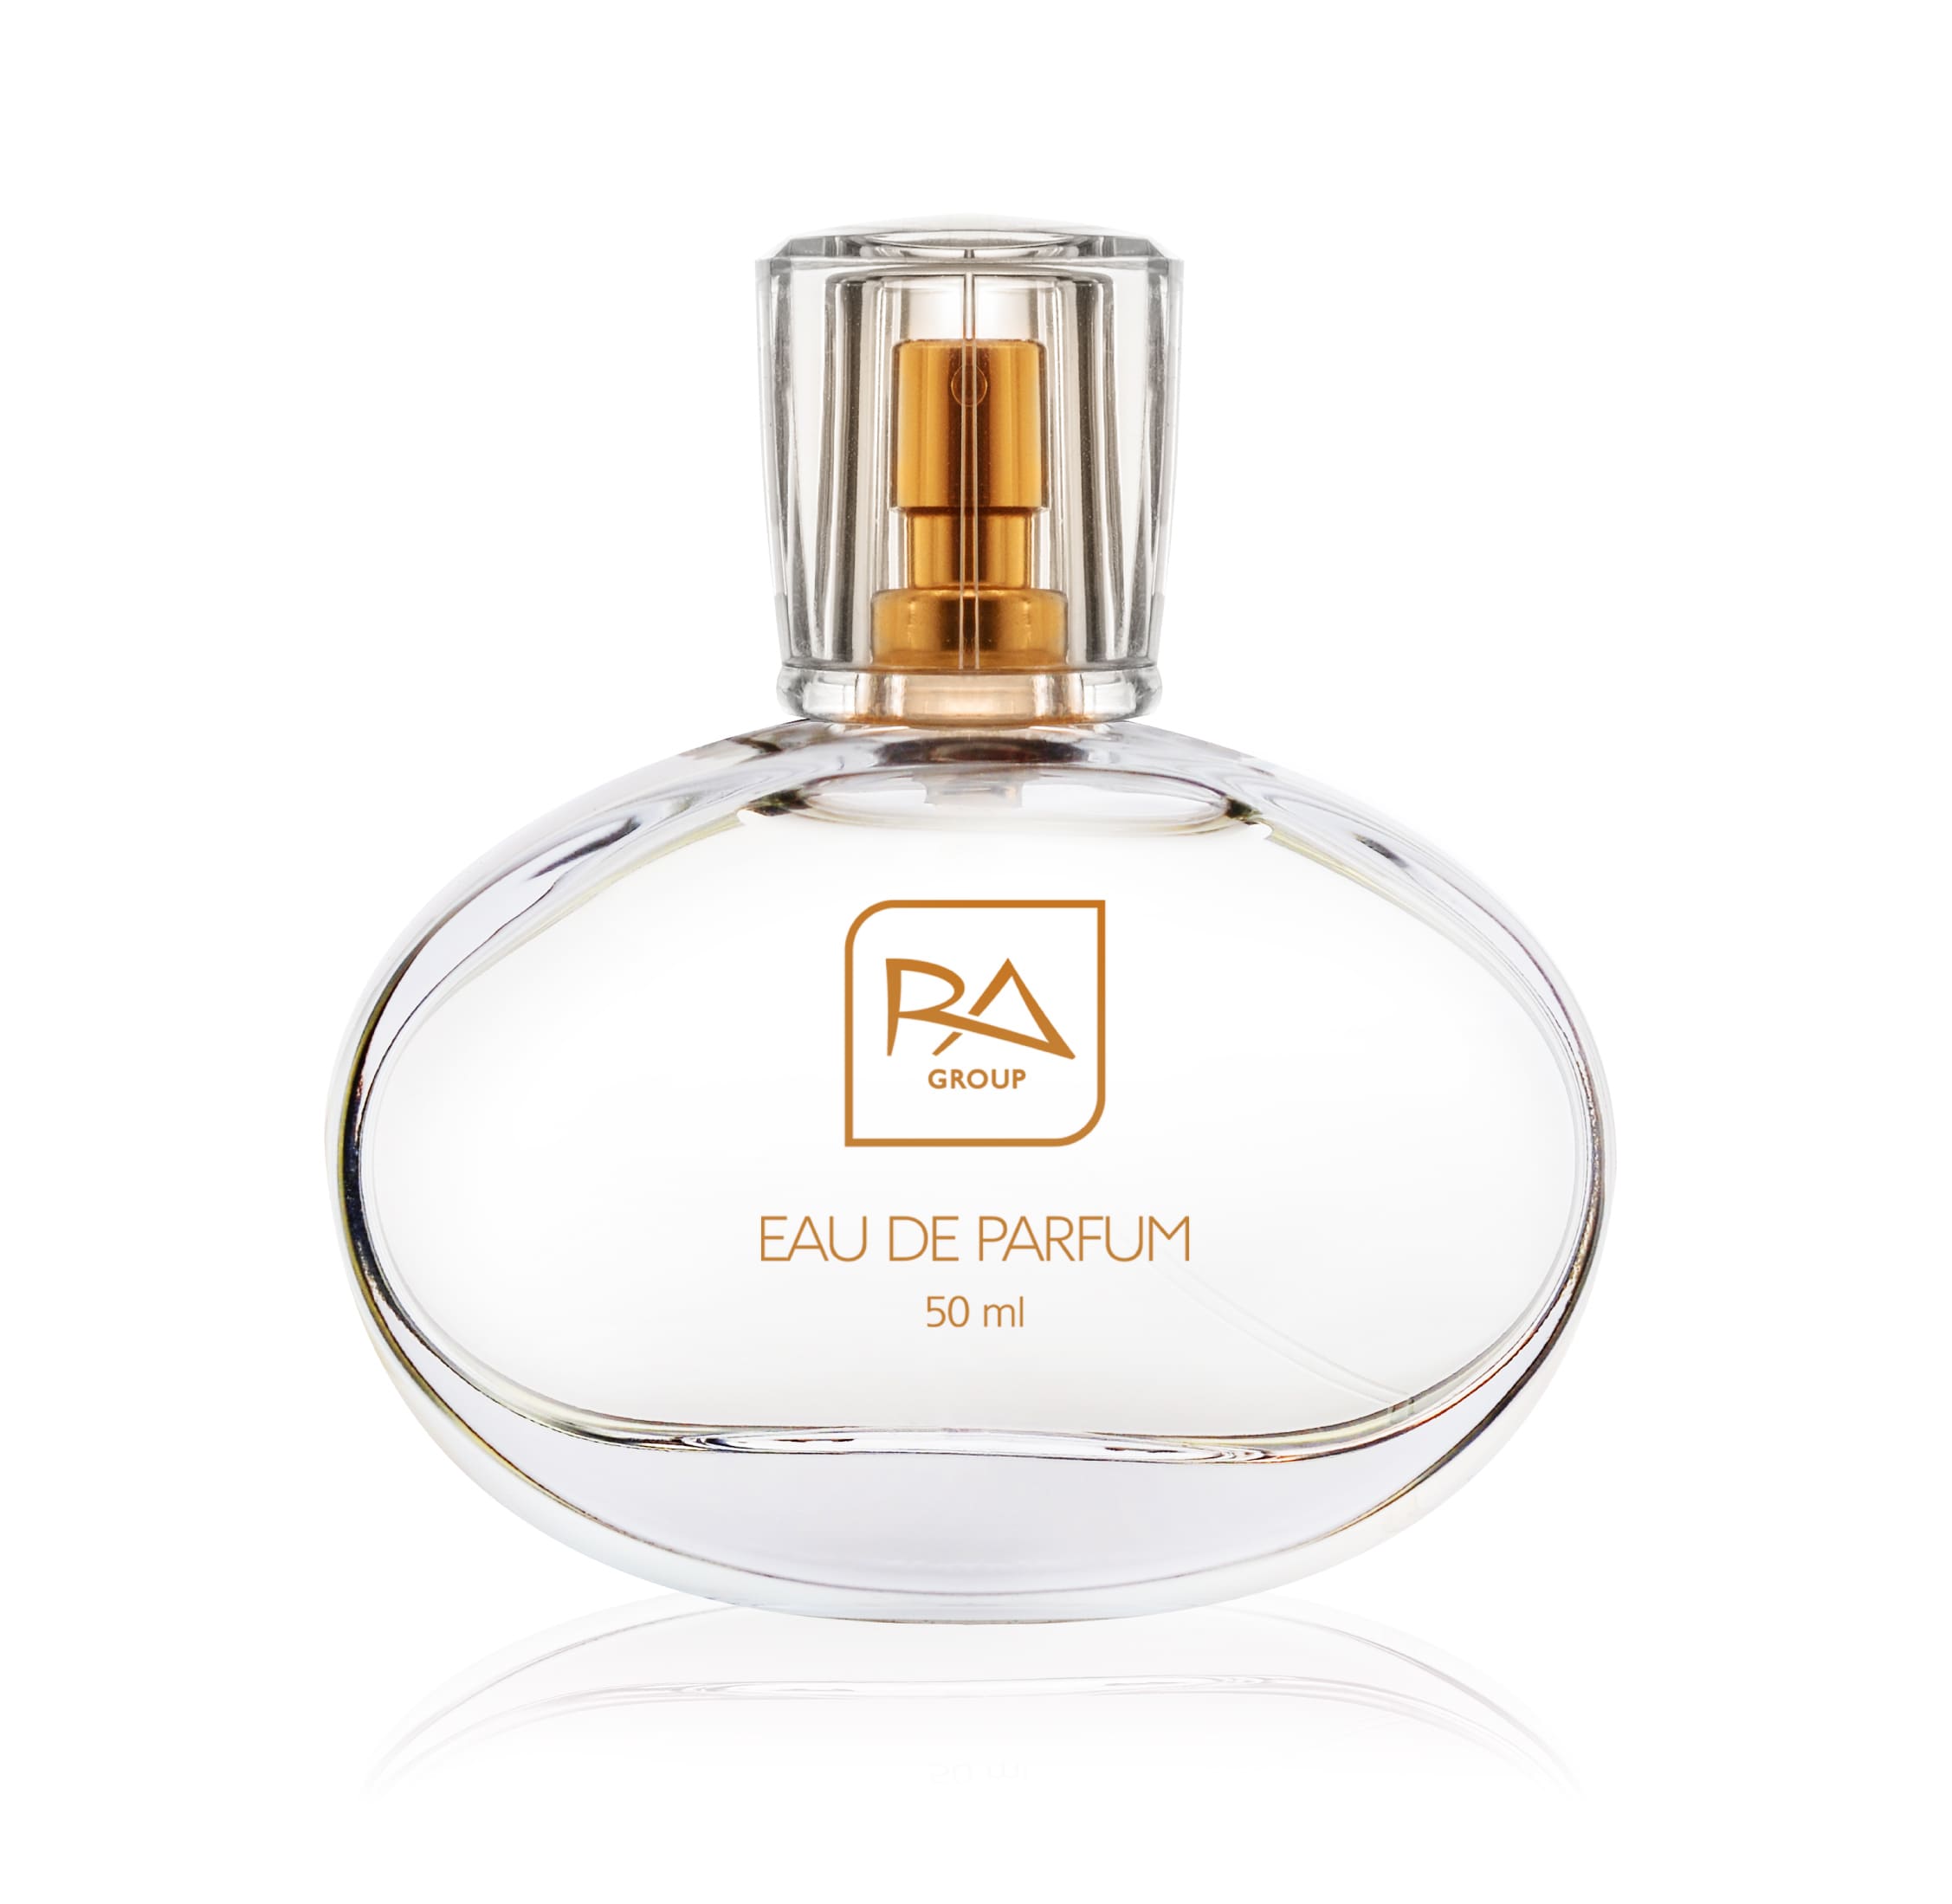 Eau de parfum RA1 new